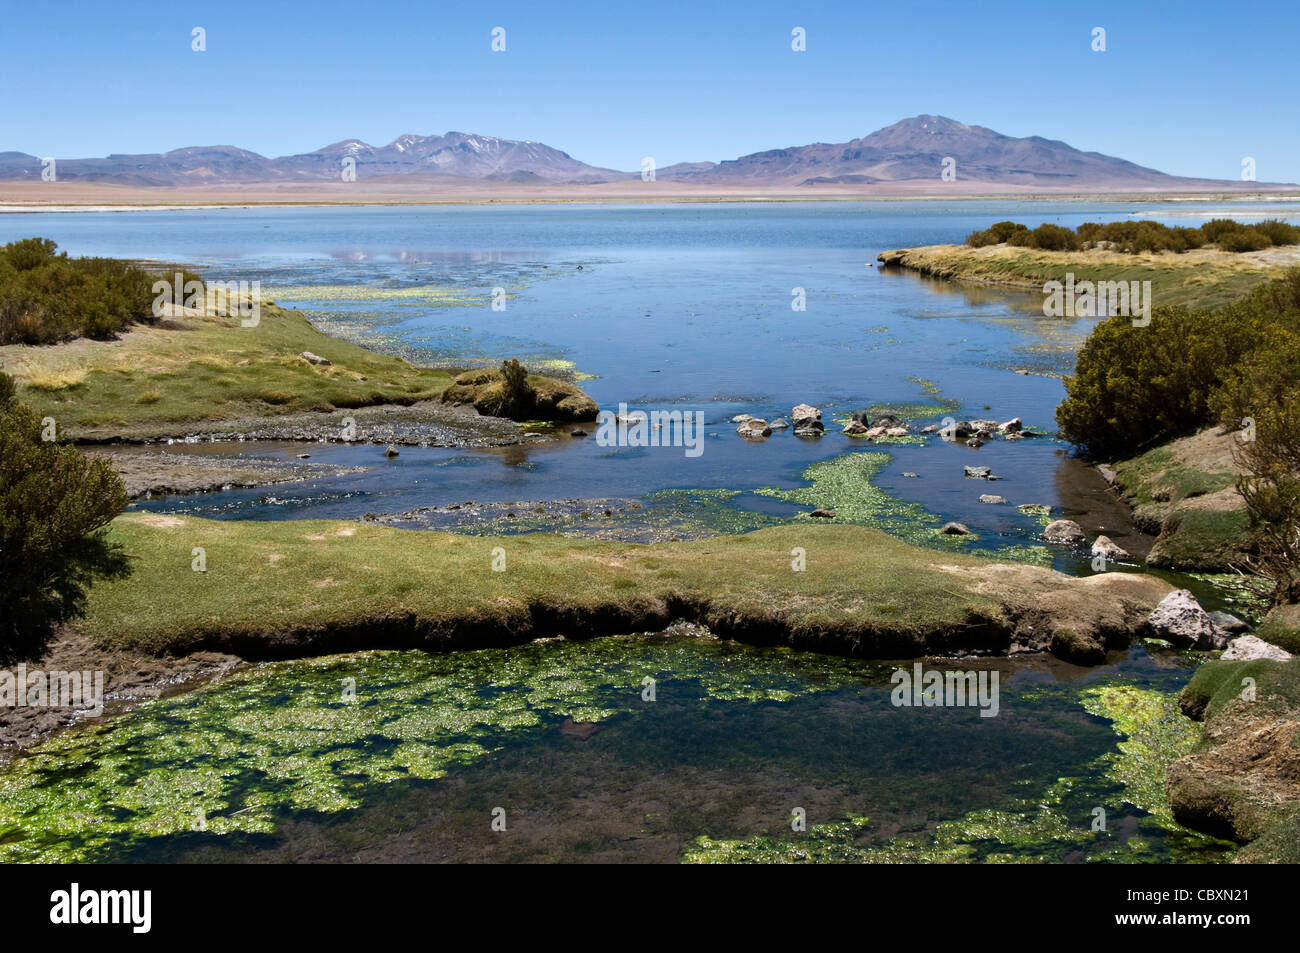 Chile. Atacama desert. Flamingos national reserve. Lake in the Tara salar. Stock Photo